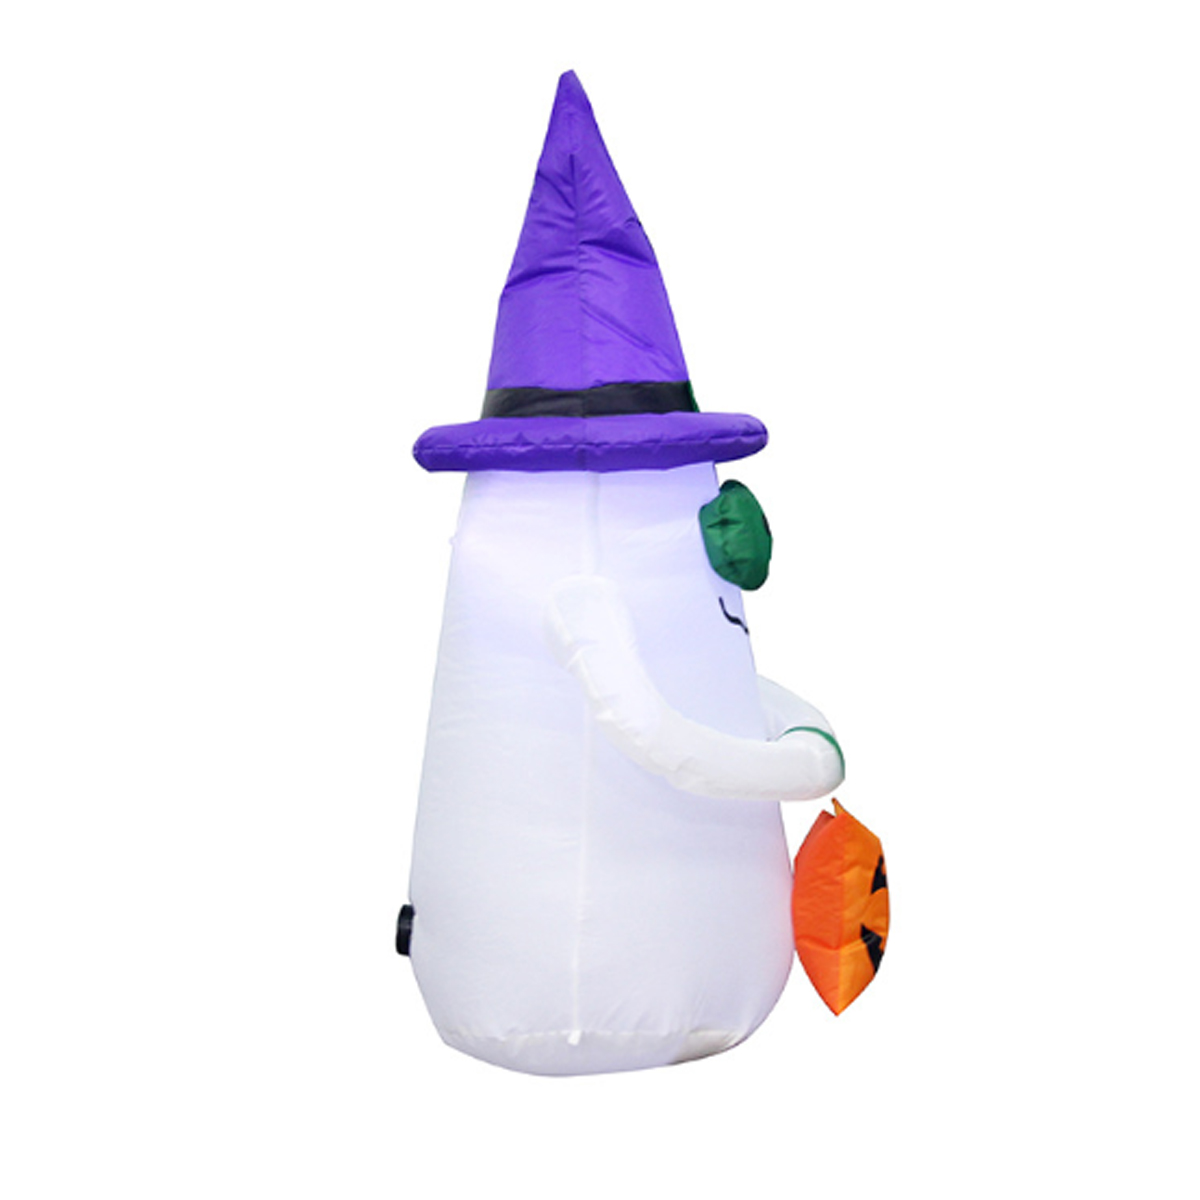 12M-Halloween-Inflatable-Pumpkin-Airblown-Blow-in-Pumpkin-Up-Outdoor-Yard-Decor-Toys-1570794-8